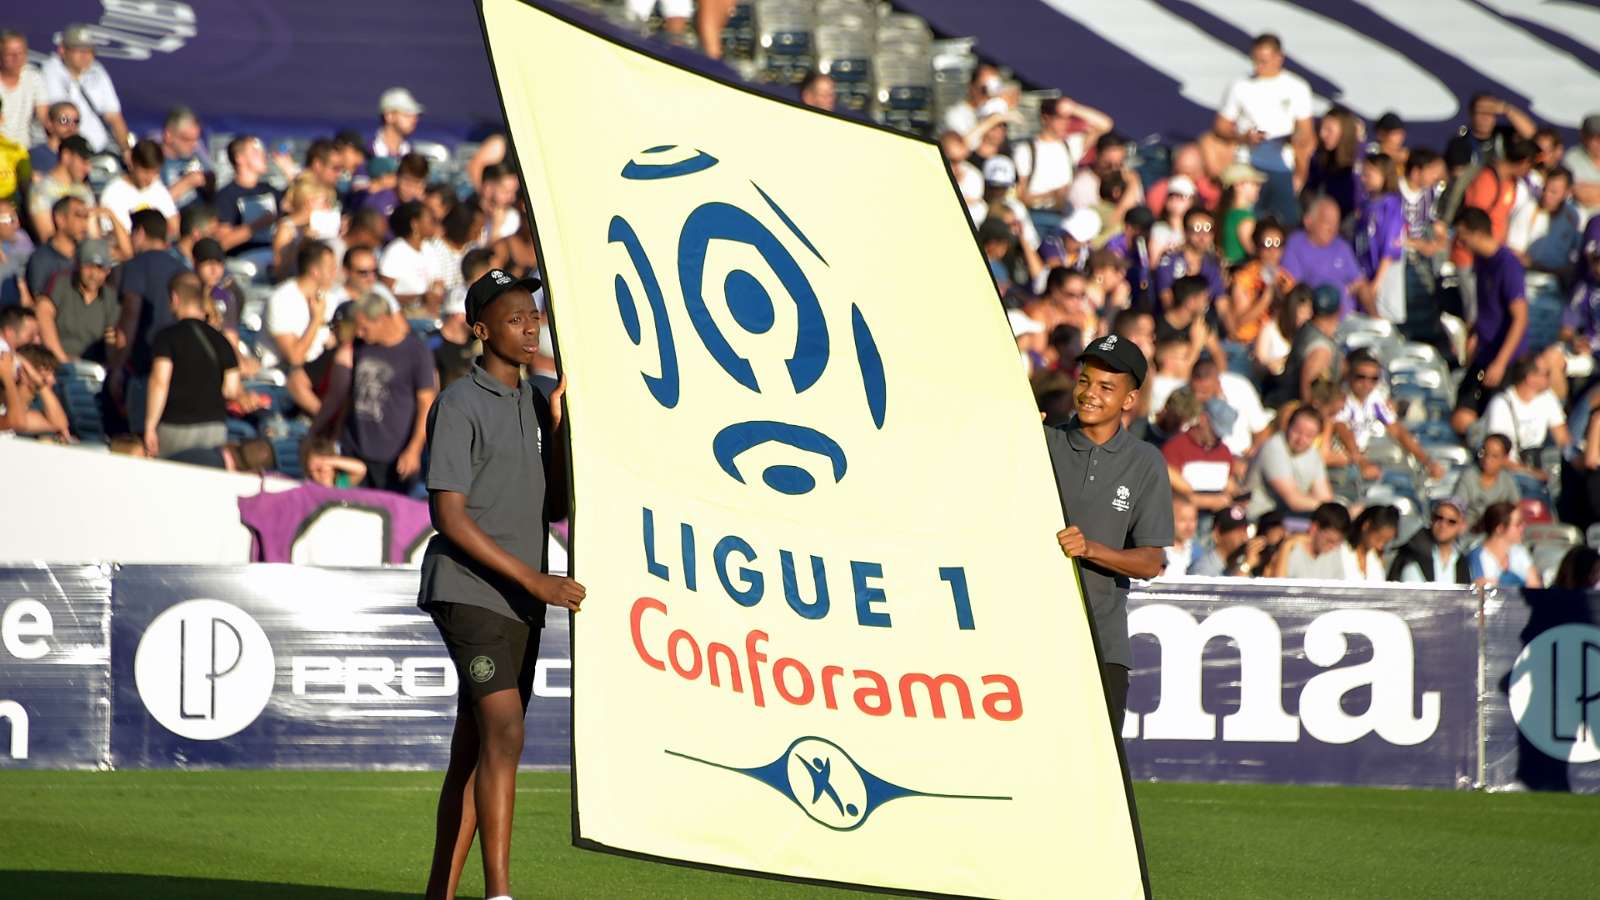 لیگ یک فرانسه-Ligue 1-France